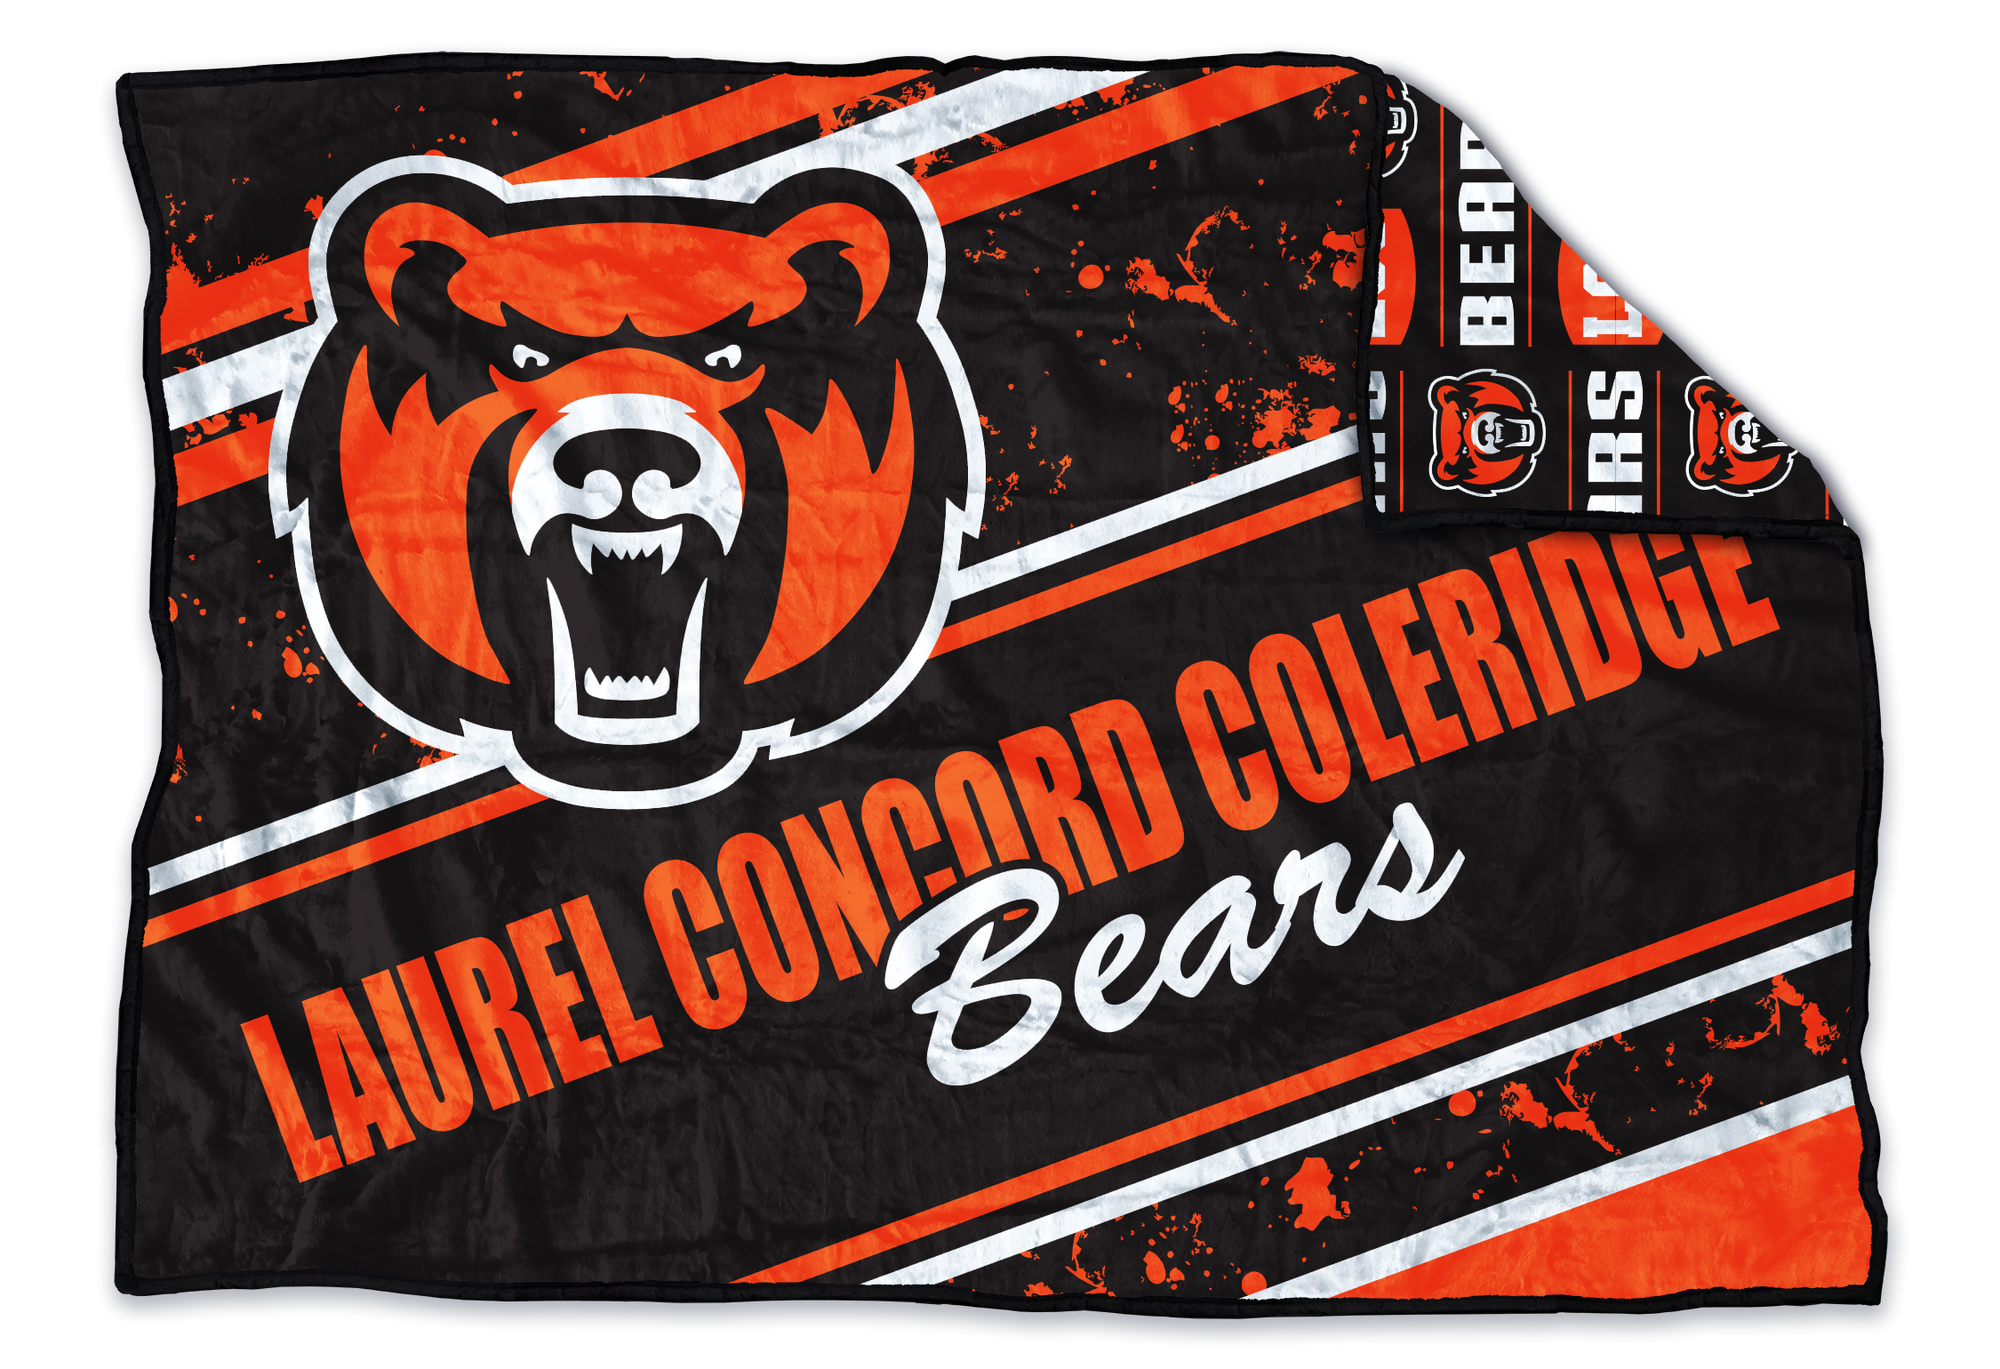 Laurel Concord Coleridge Bears (LCC)